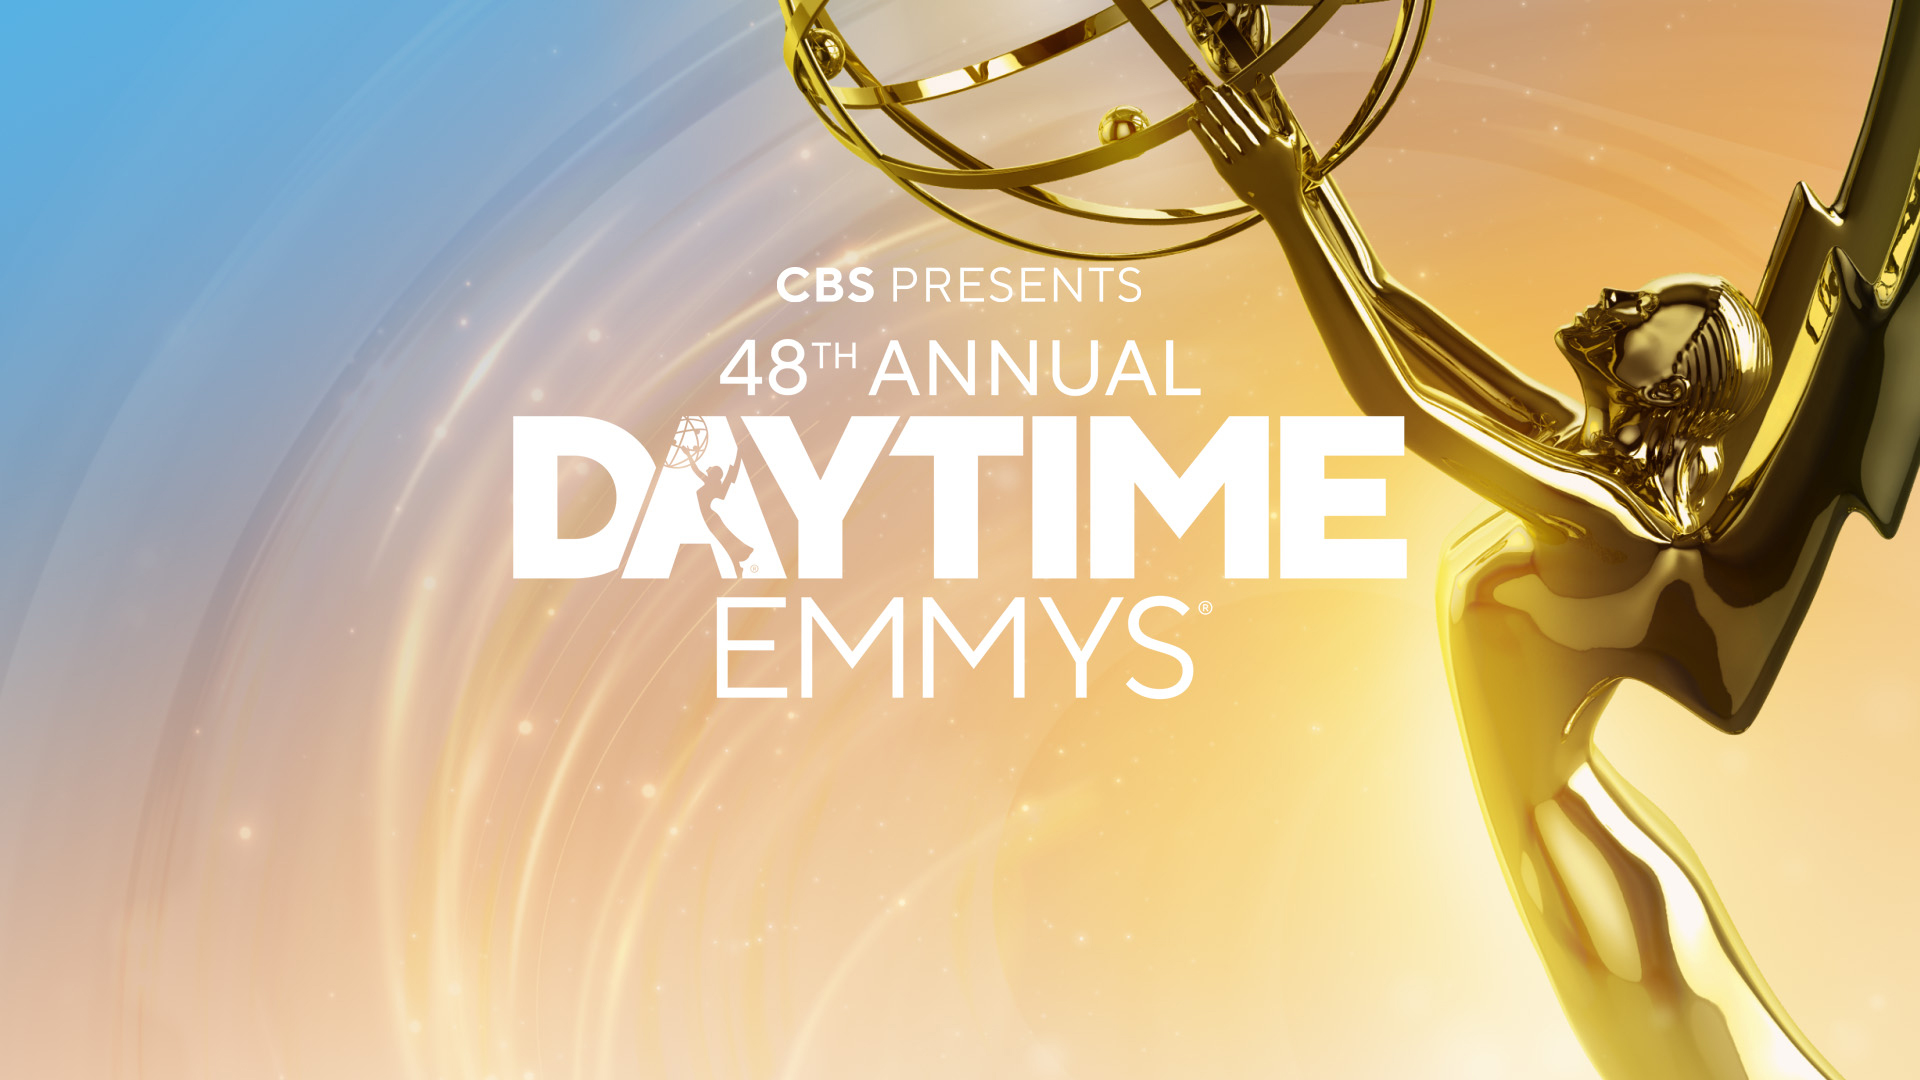 Daytime Emmy Awards News on CBS